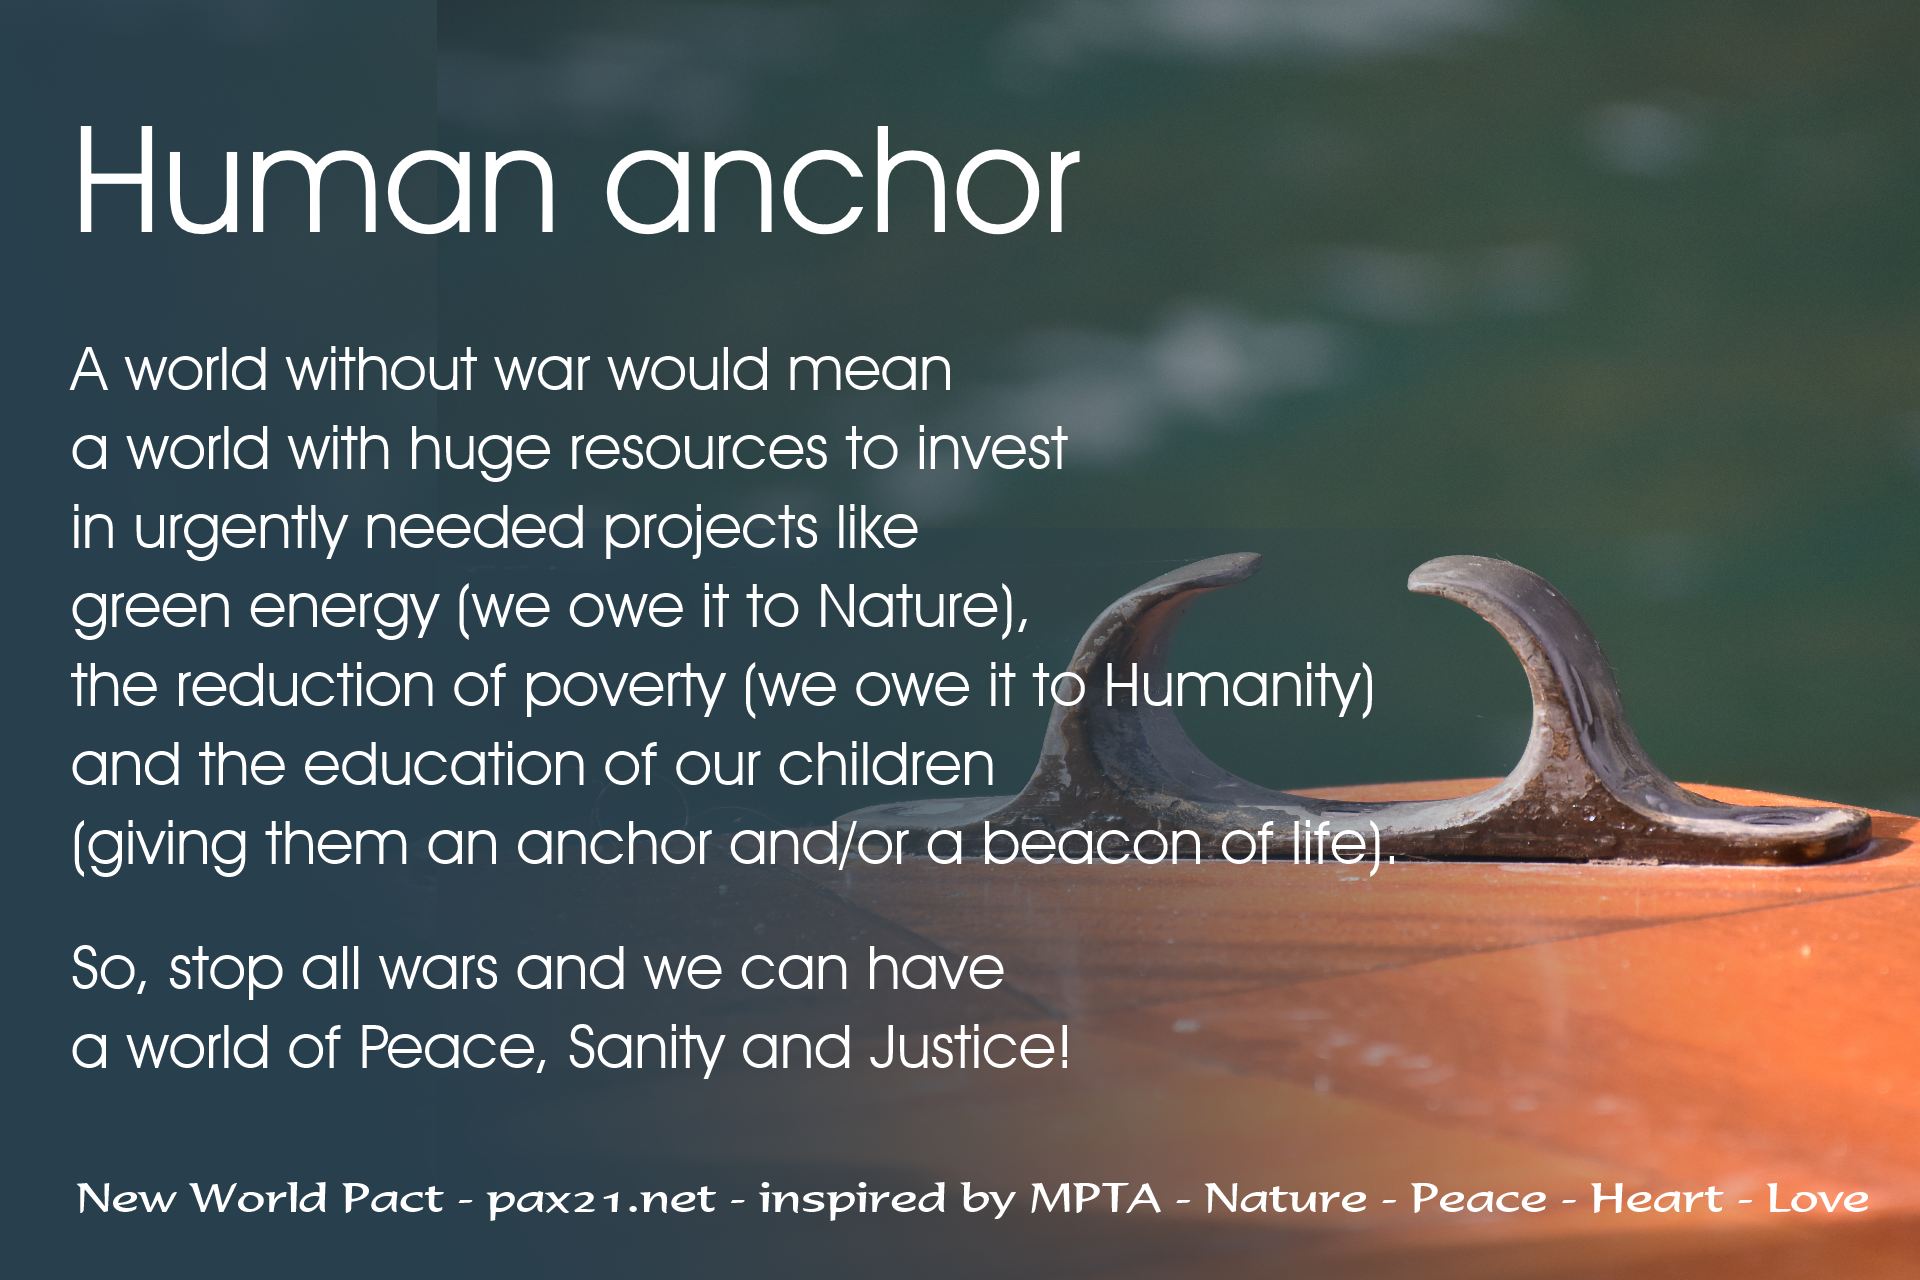 Human anchor